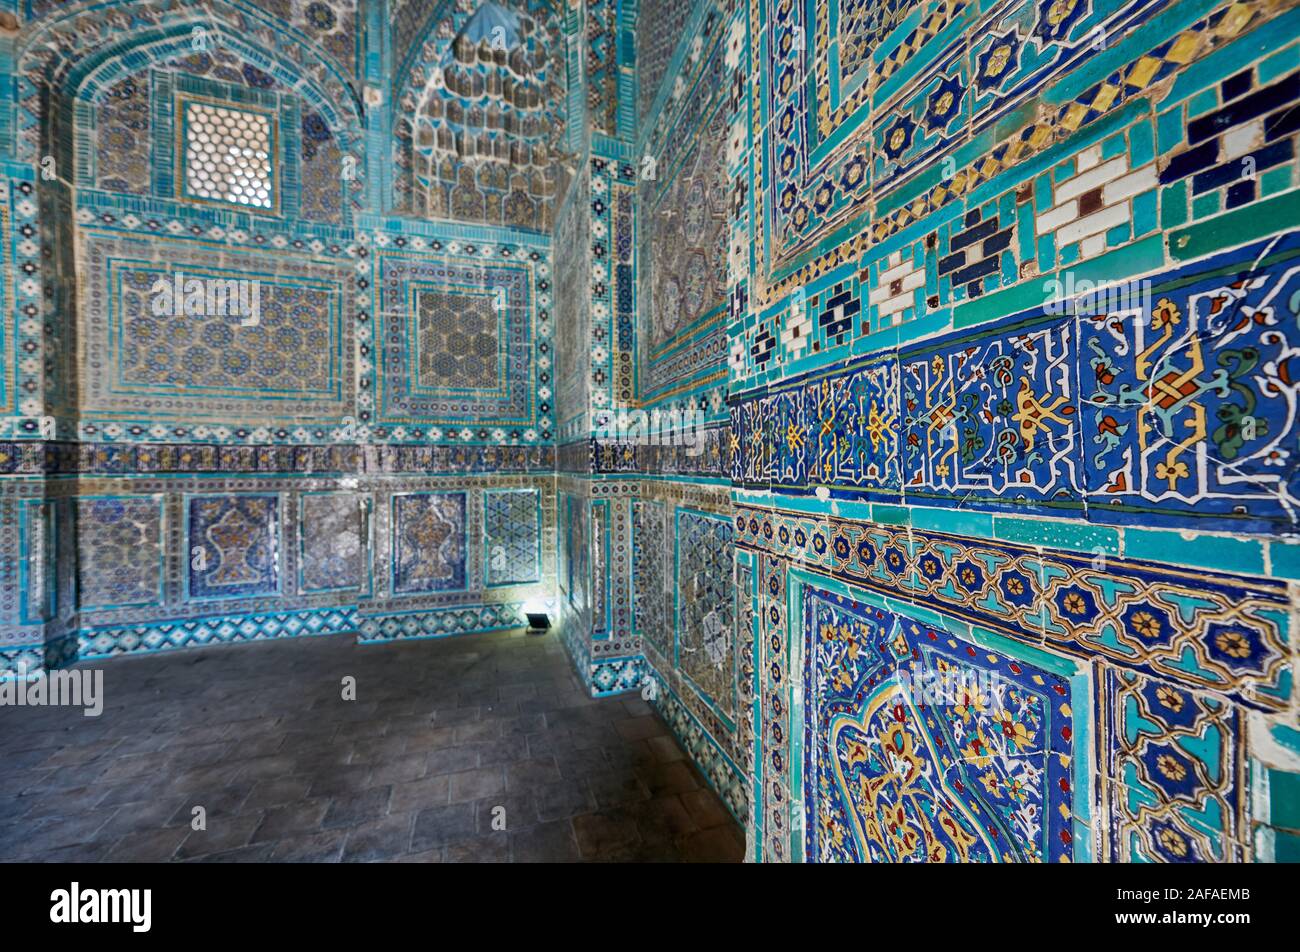 interior shot in tomb of necropolis Shah-i-Zinda, Samarqand, Uzbekistan, Central Asia Stock Photo